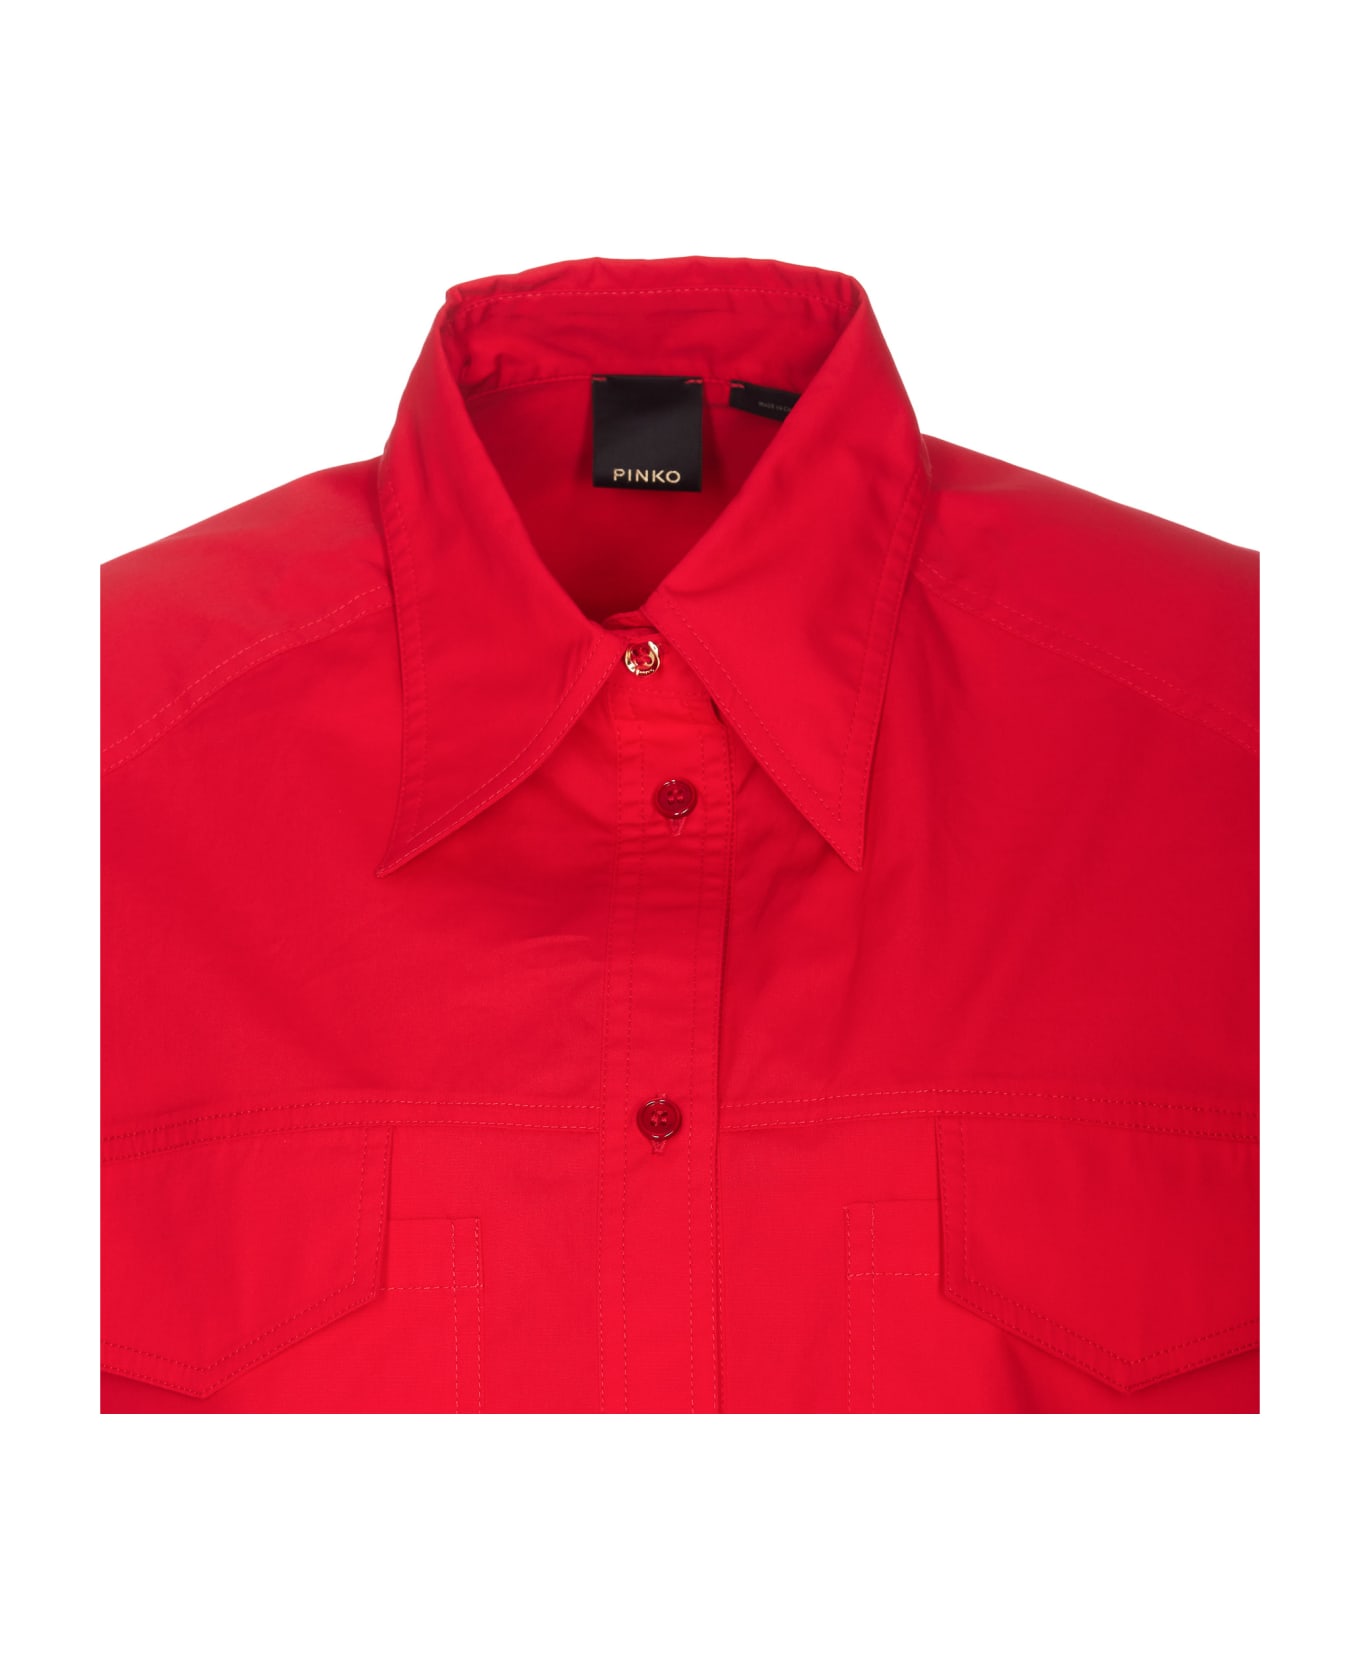 Pinko Castallia Shirt - Red